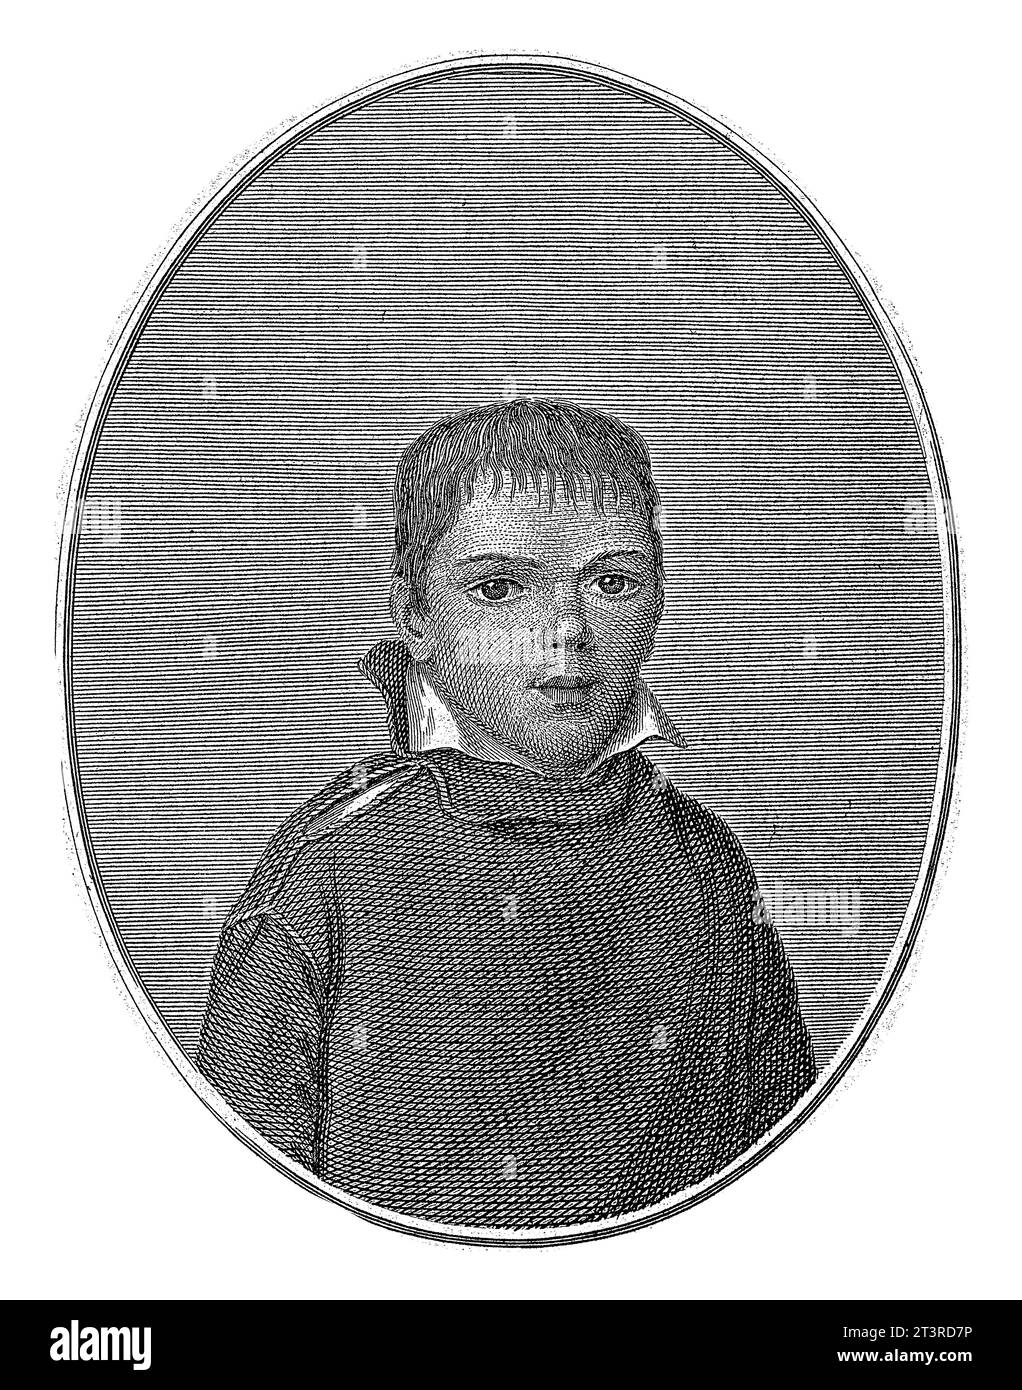 Portrait of Mathieu Goffin, Leonard Jehotte, after H. Johns, 1782 - 1851 Portrait bust of Mathieu Goffin, son of Hubert Goffin. Stock Photo